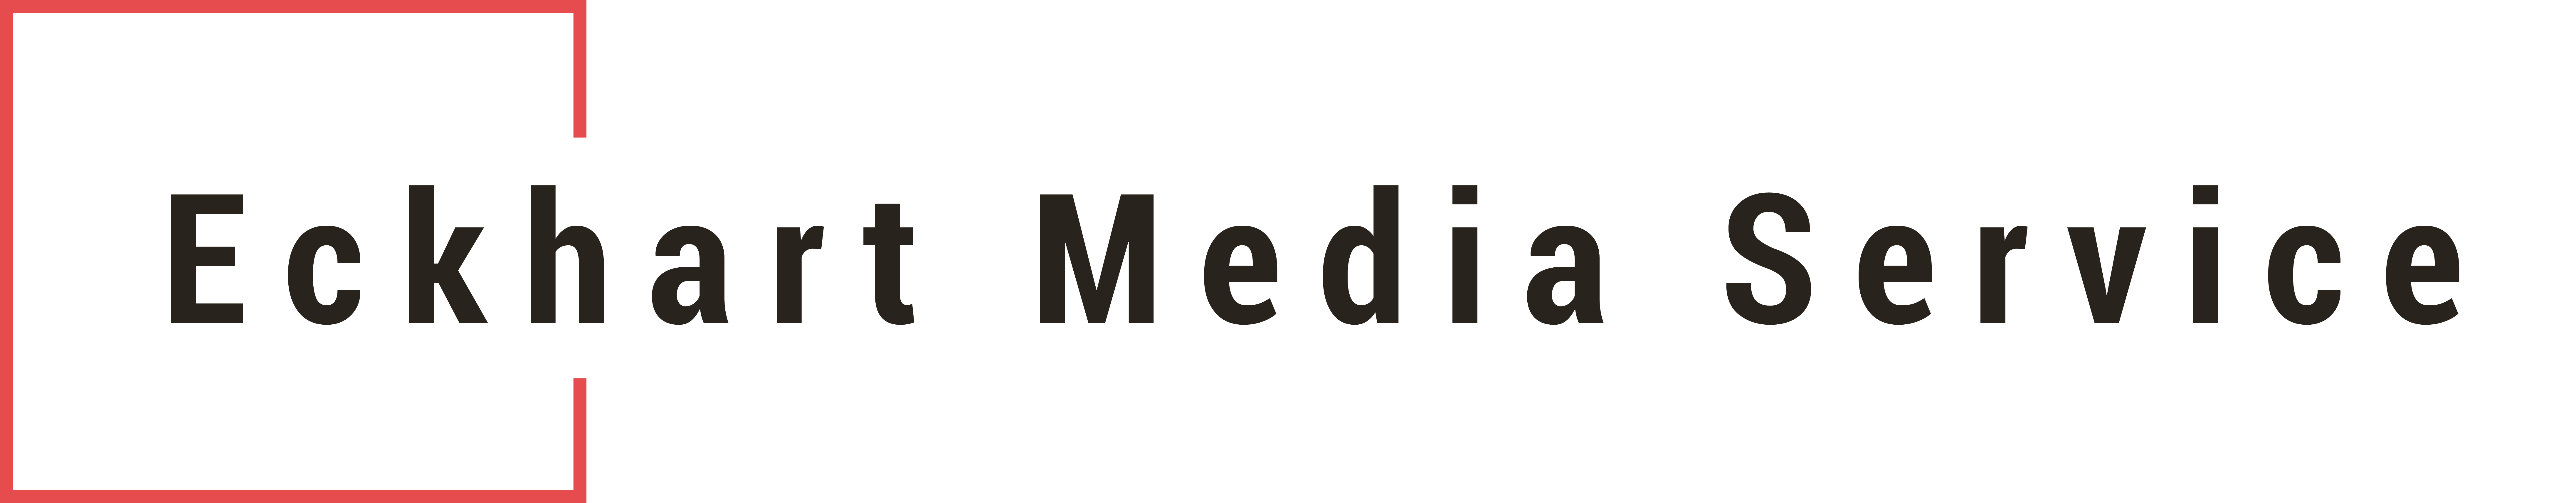 Eckhart Media Service